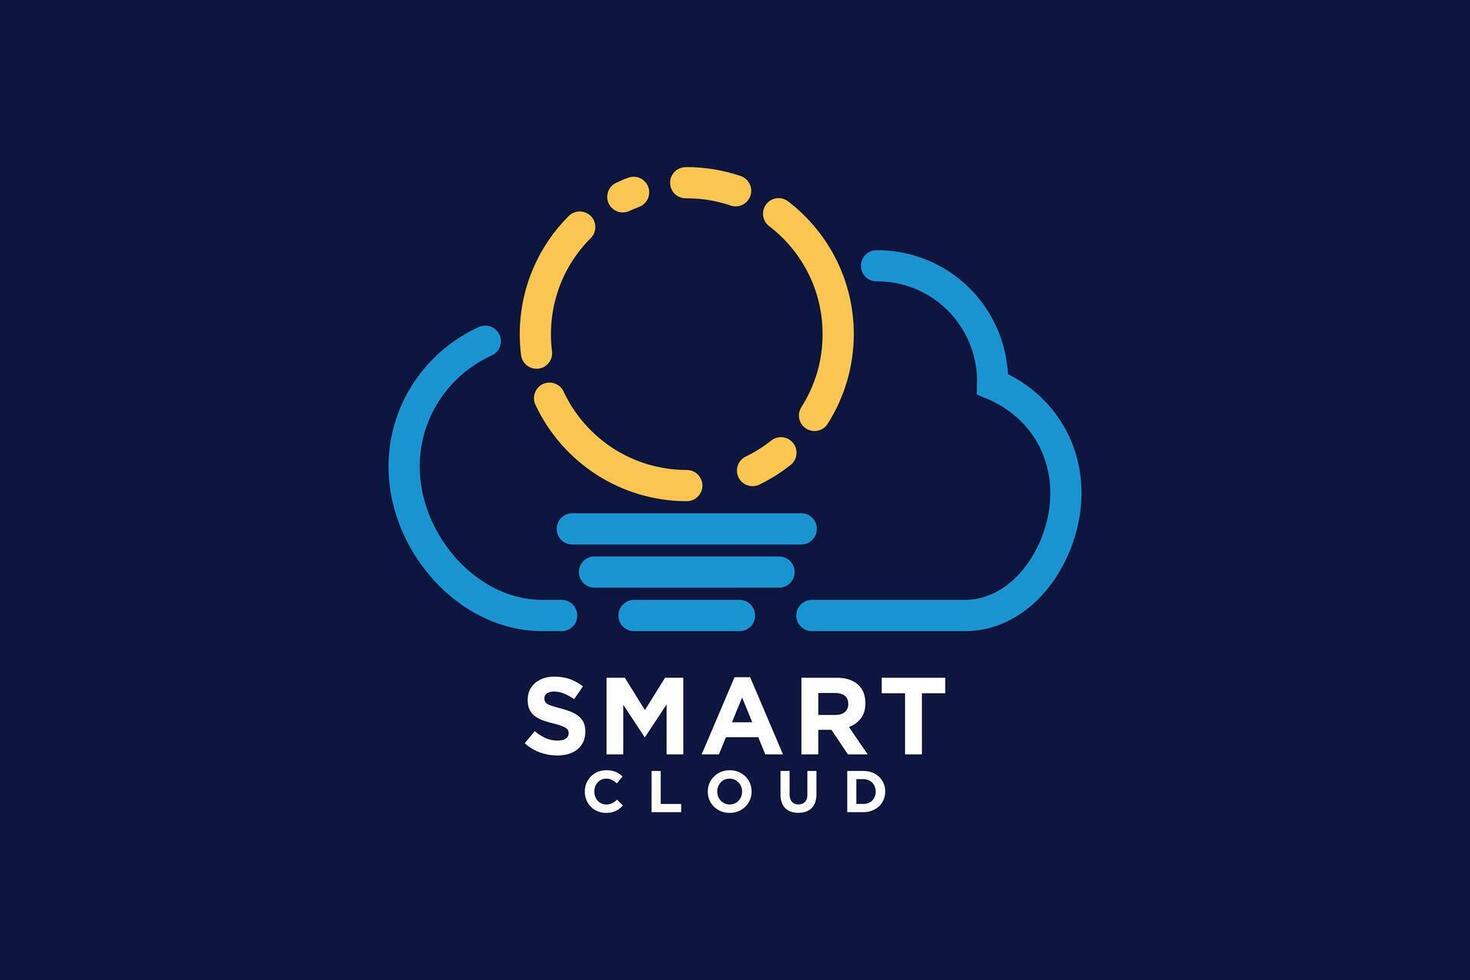 Smarrt cloud logo design creative unique concept vector